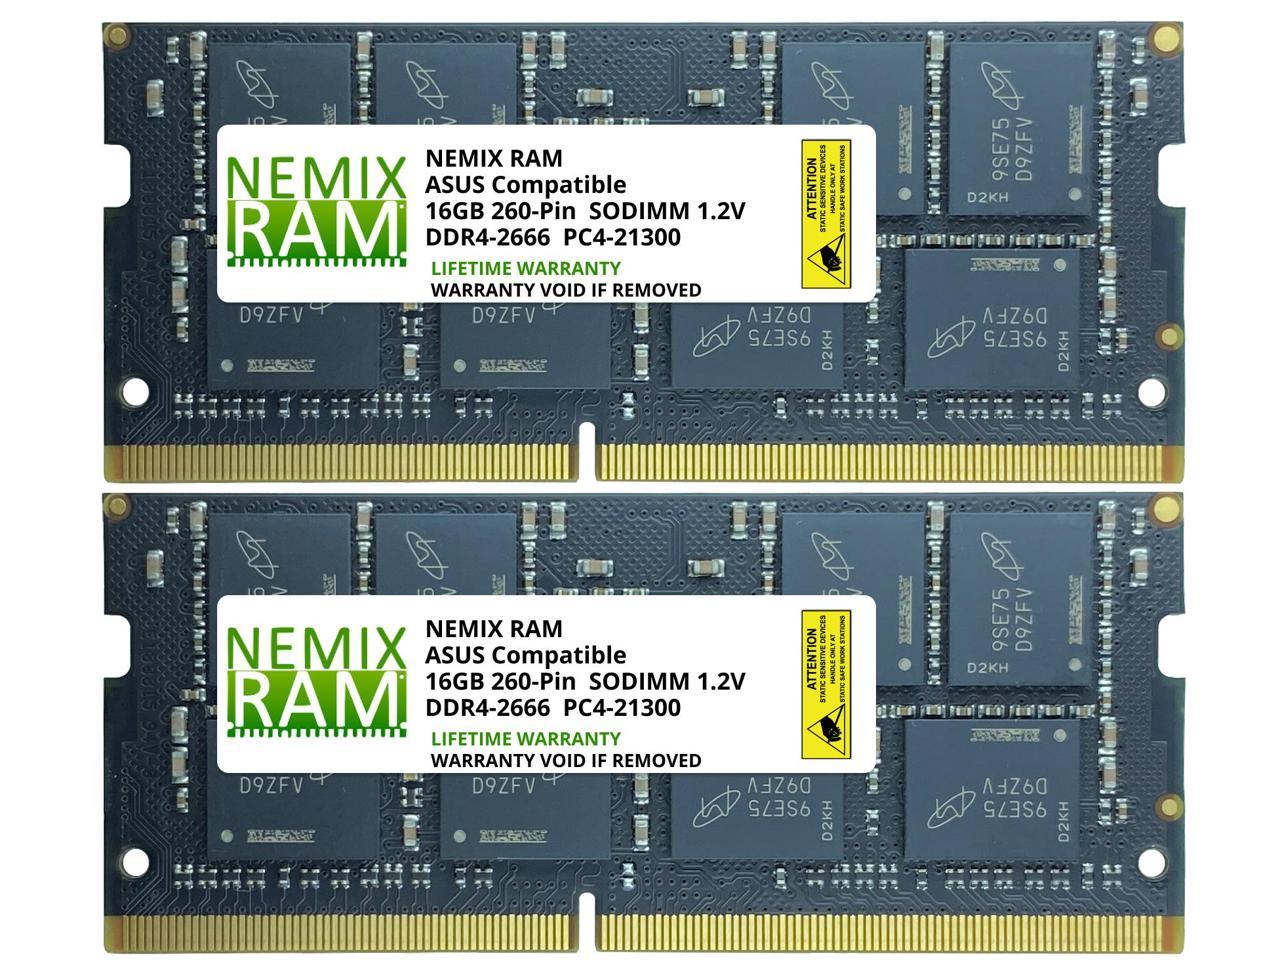 NEMIX RAM 32GB Kit (2 x 16GB) DDR4-2666 SODIMM 2Rx8 Memory for ASUS Mini PCs